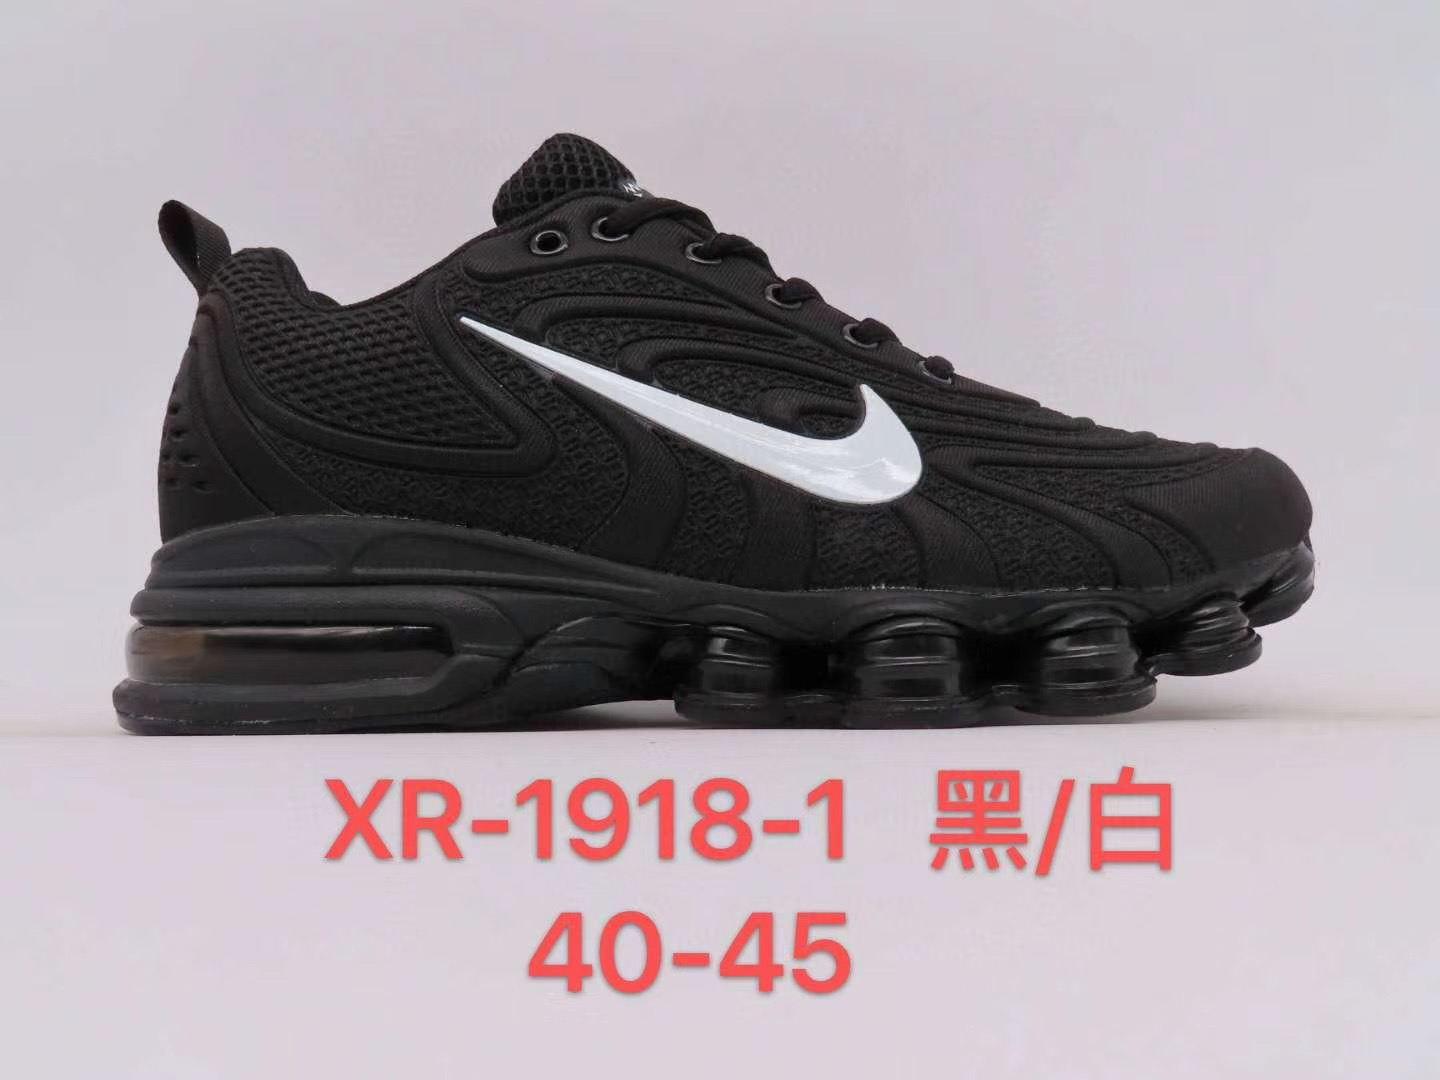 Nike Air Max 2019.6 Voyager Black White Shoes